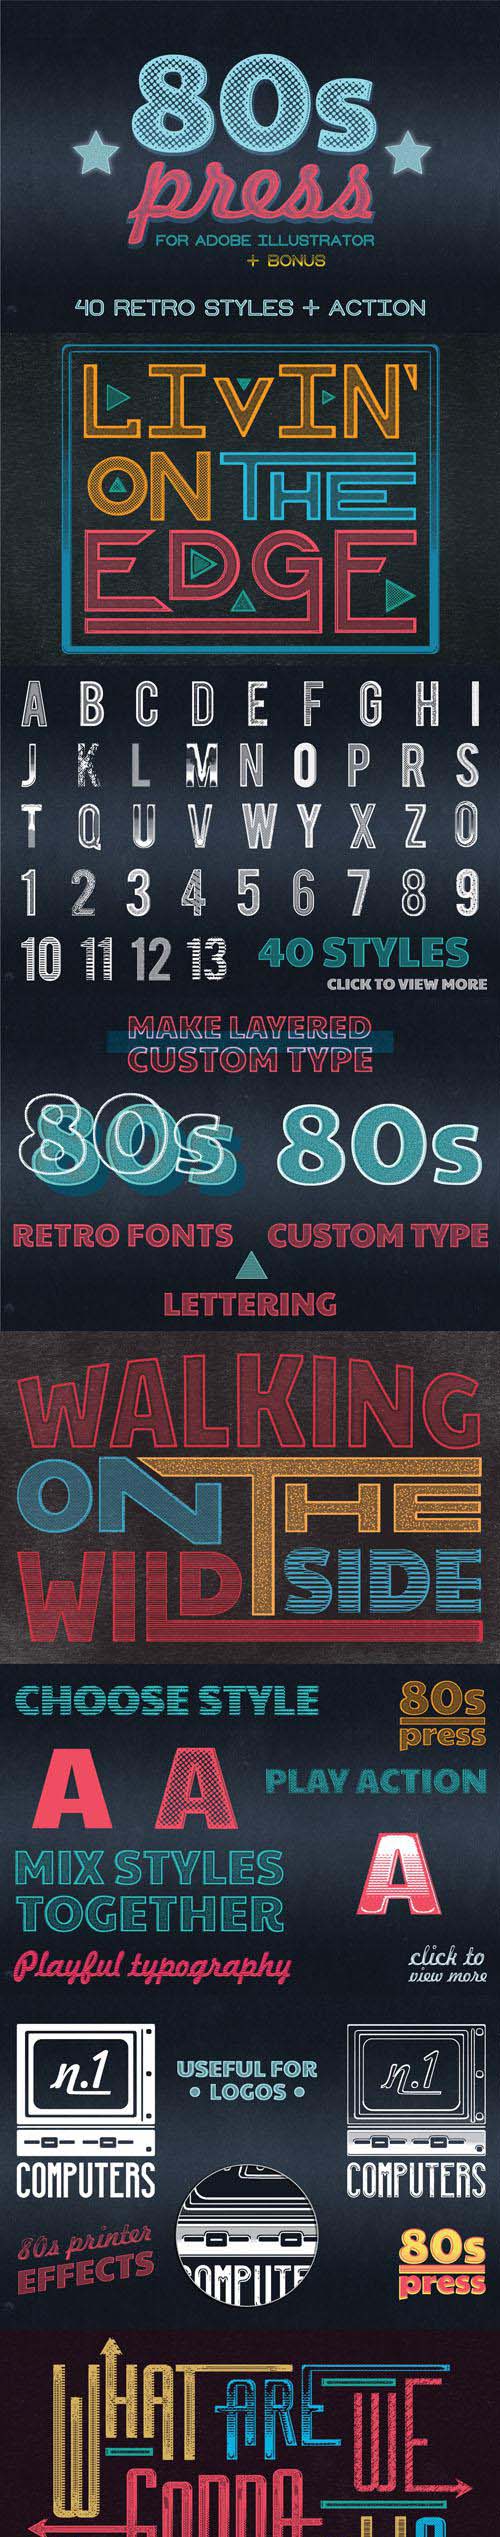 80's Press for illustrator - 40 Retro Styles & Actions